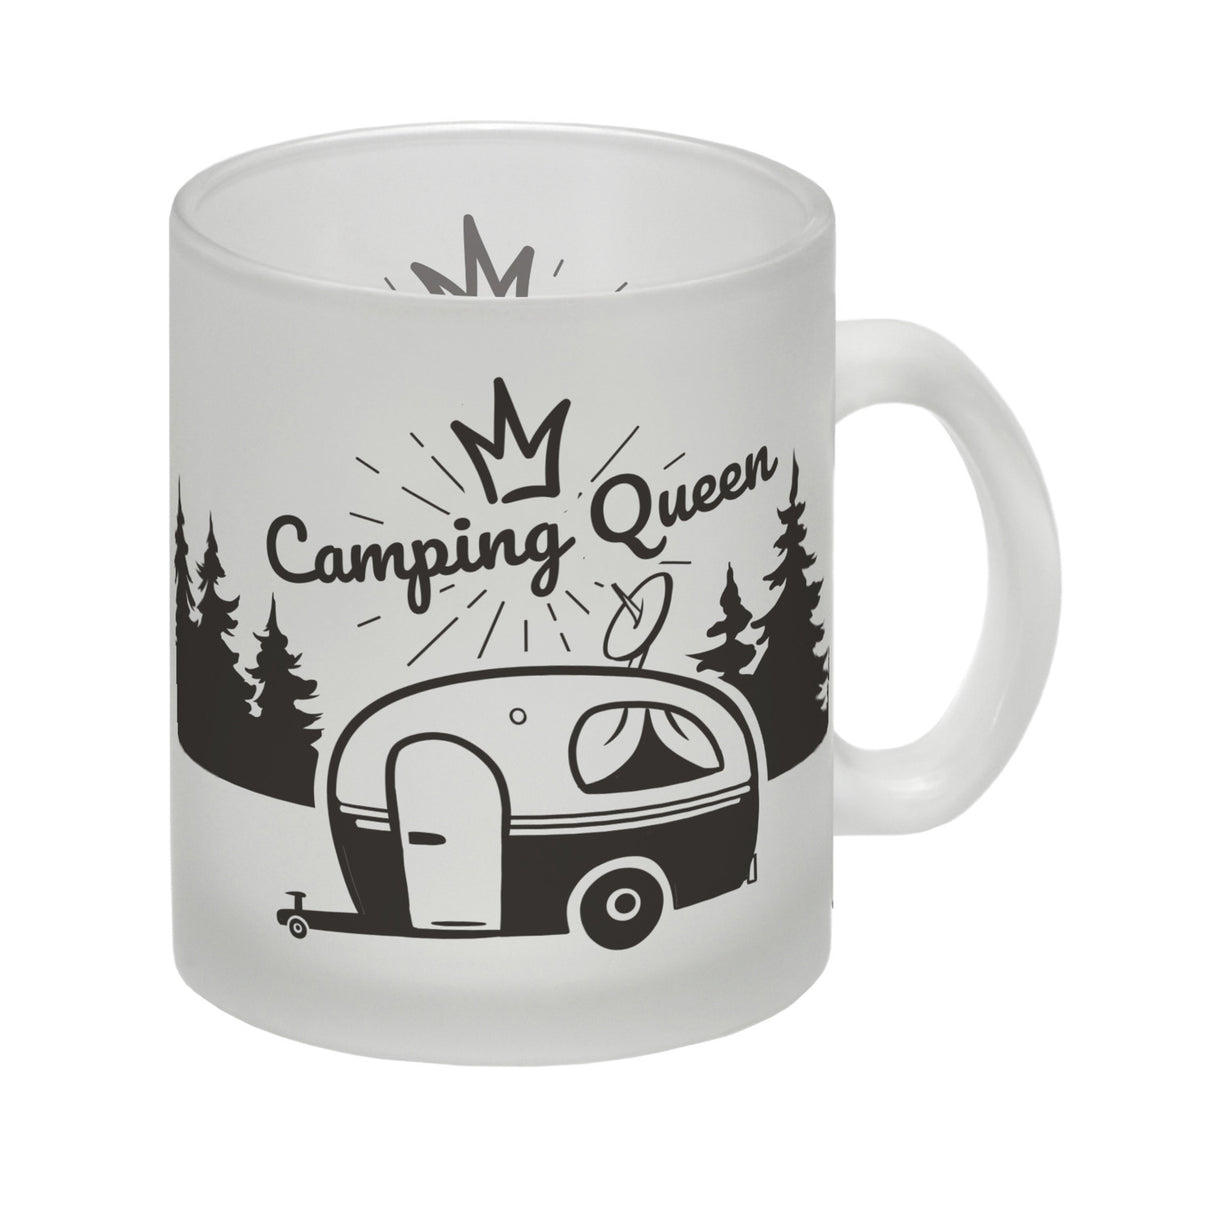 Camping Queen Kaffeebecher mit wunderschönen Reisemotiven